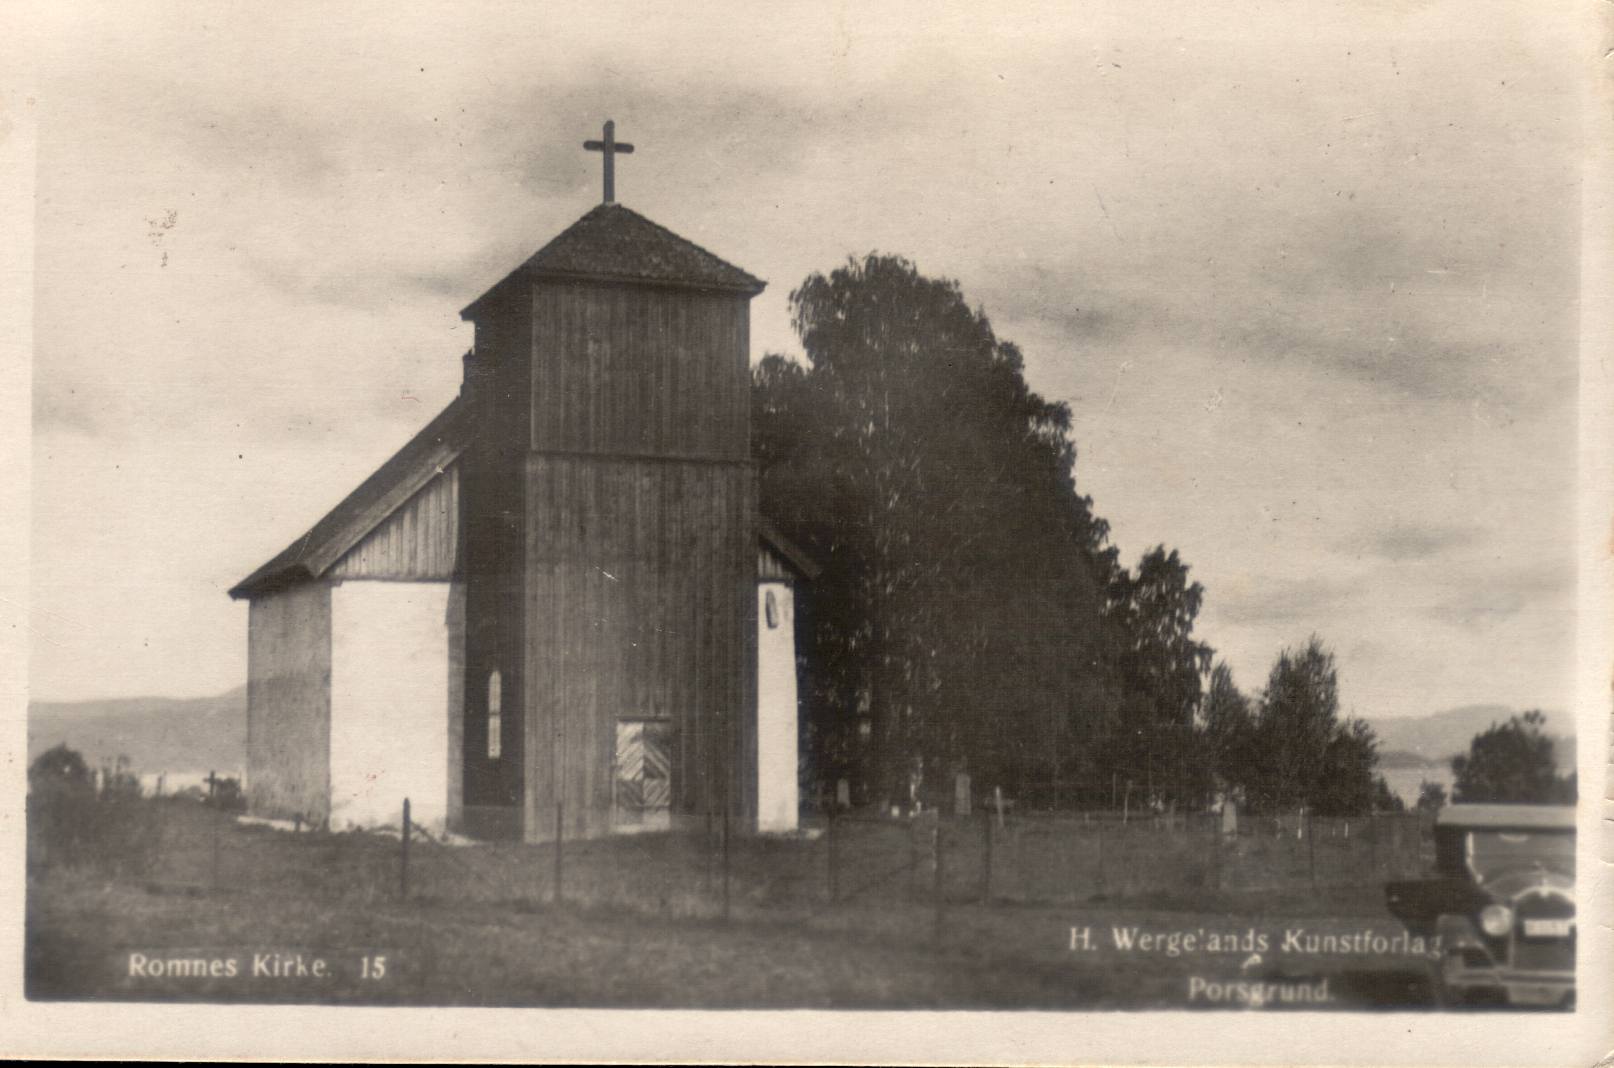 Romnes Kirke - før muren kom opp, ca. 1930.
Picture from around 1930, before perimeter wall was built.